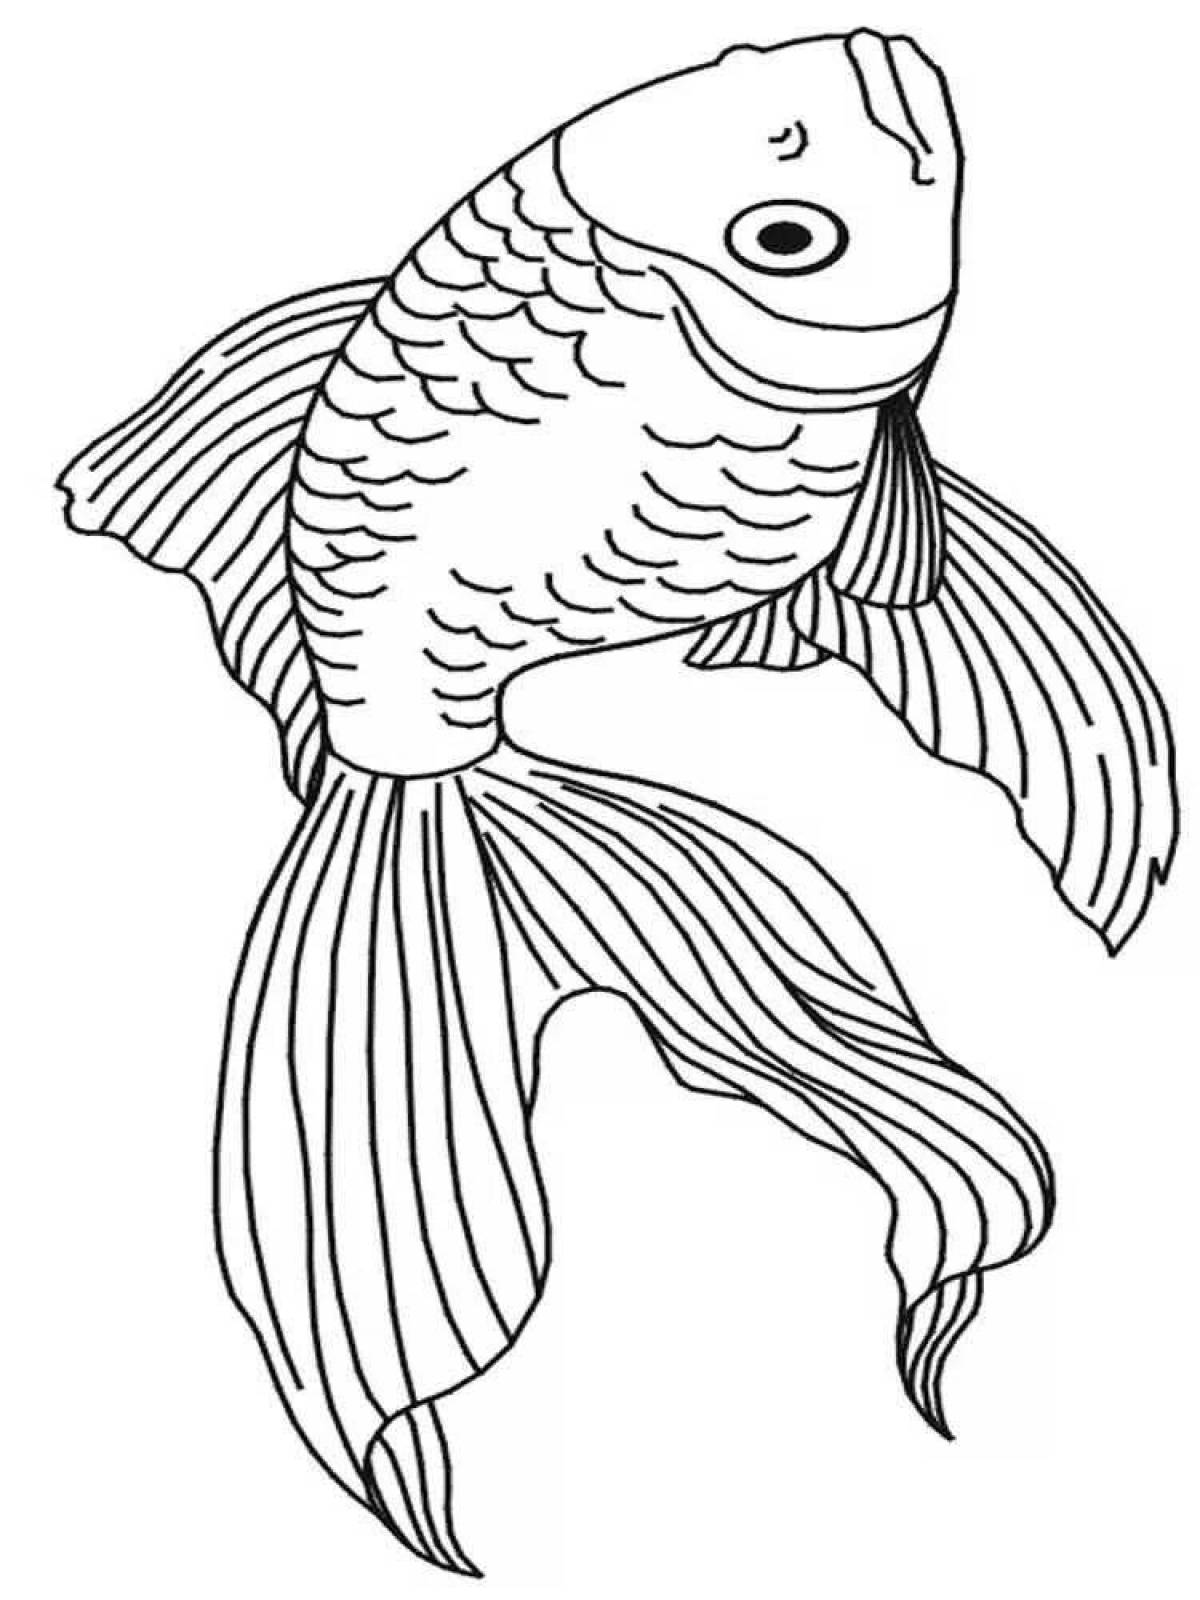 Joyful drawing of a goldfish